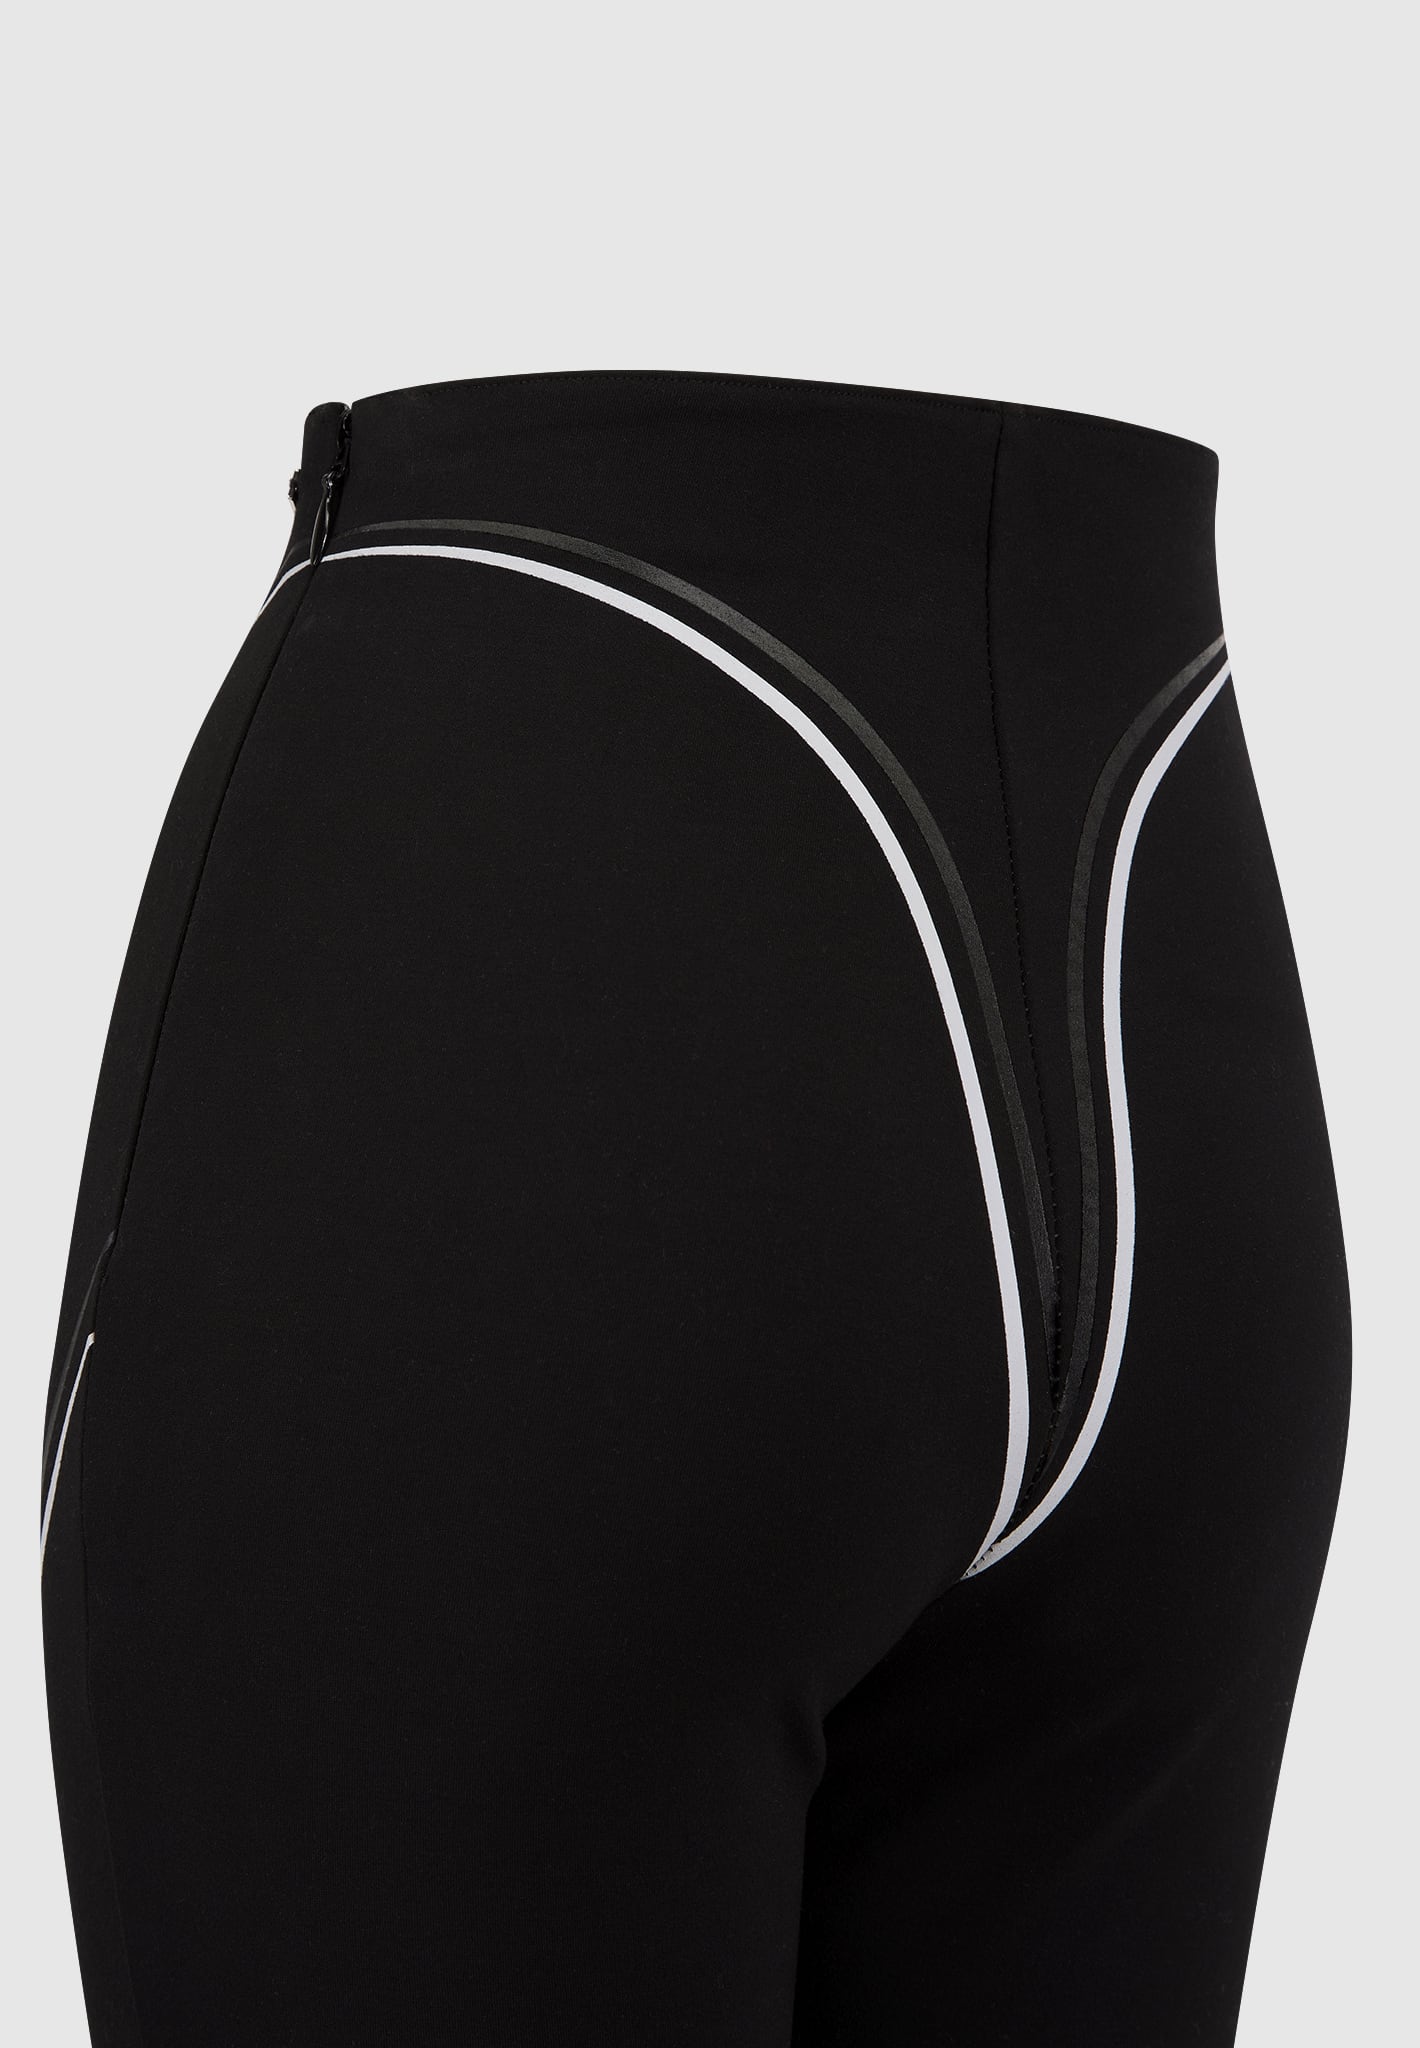 BN! Honeylove legging 2.0 (shapewear) Size L black colour (UP: $170)